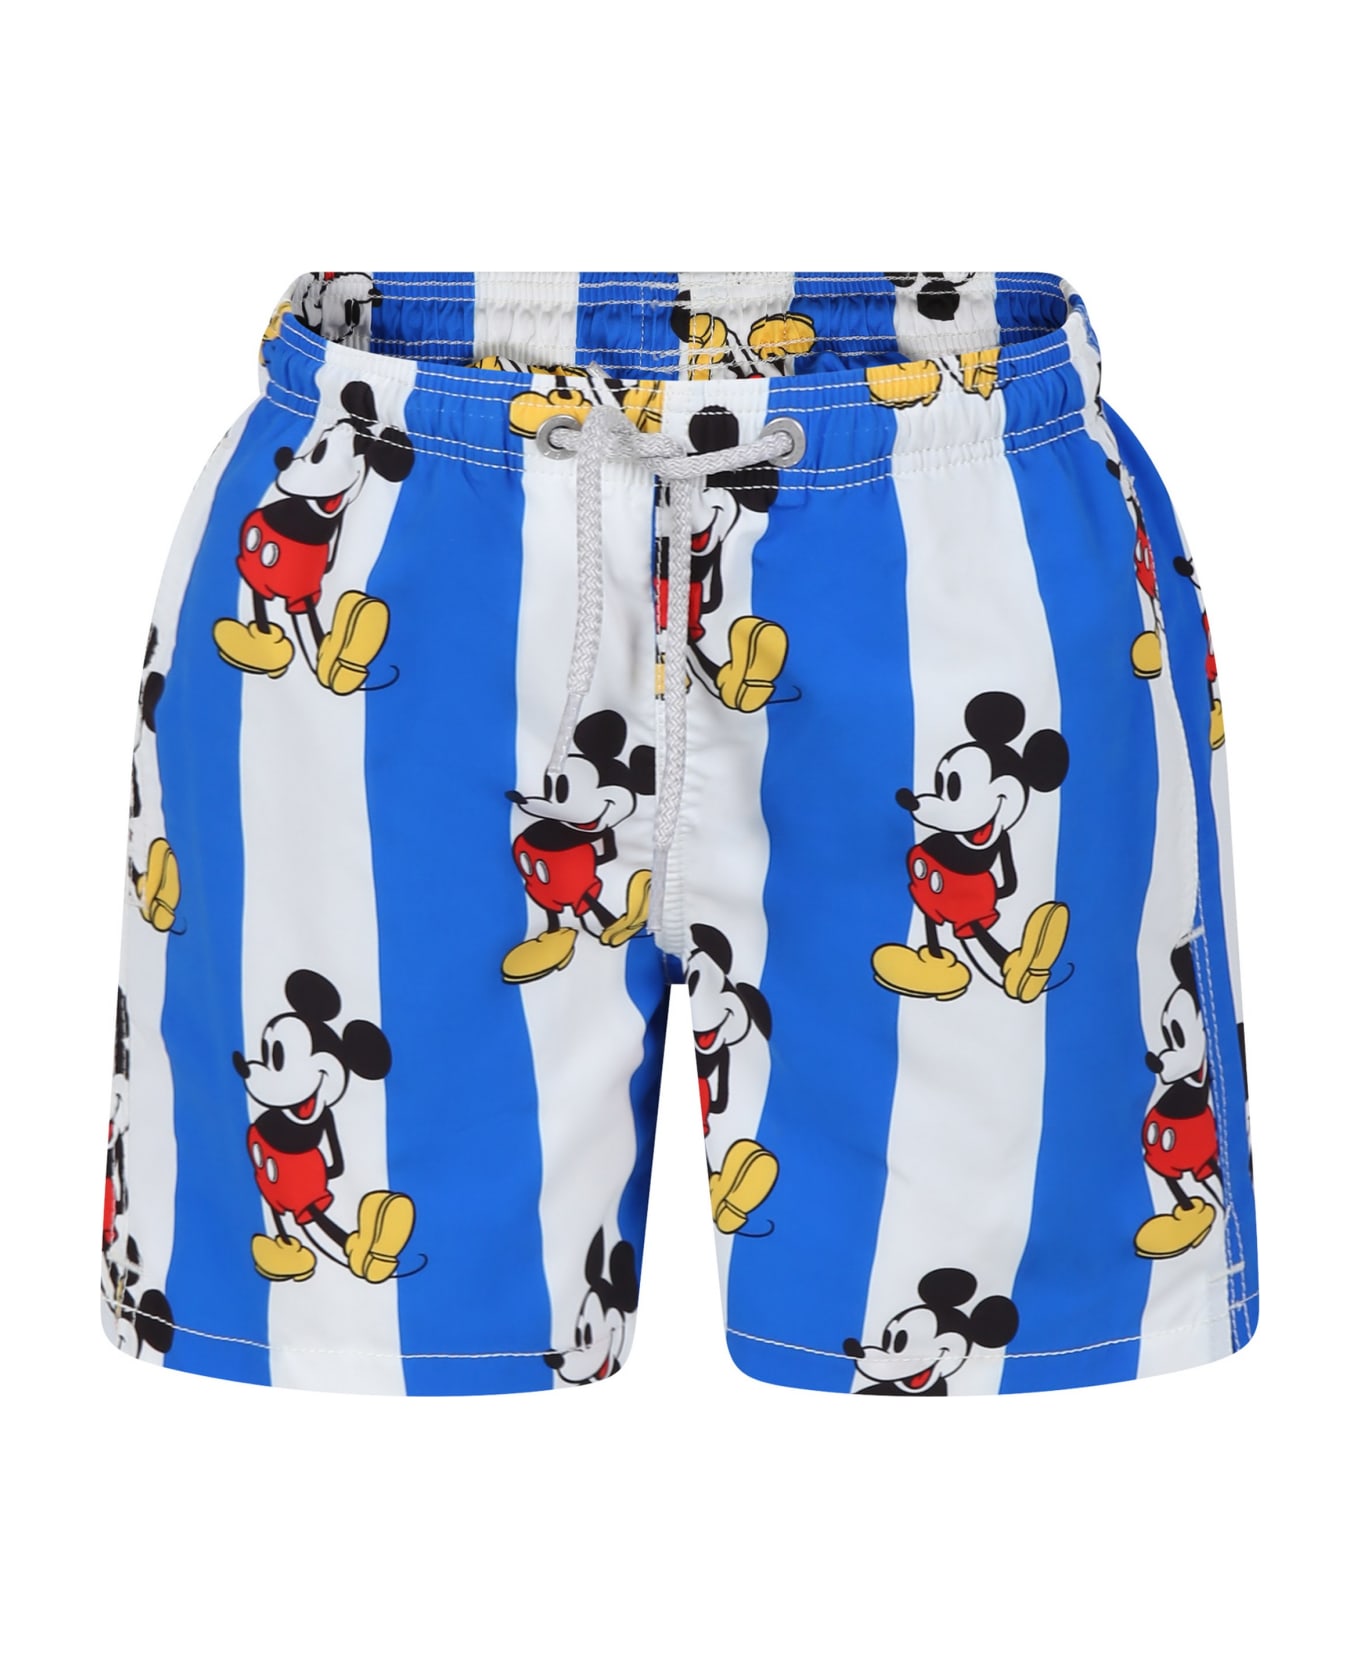 MC2 Saint Barth Light Blue Swim Shorts For Boy With Mickey Mouse Print And Logo - Light Blue